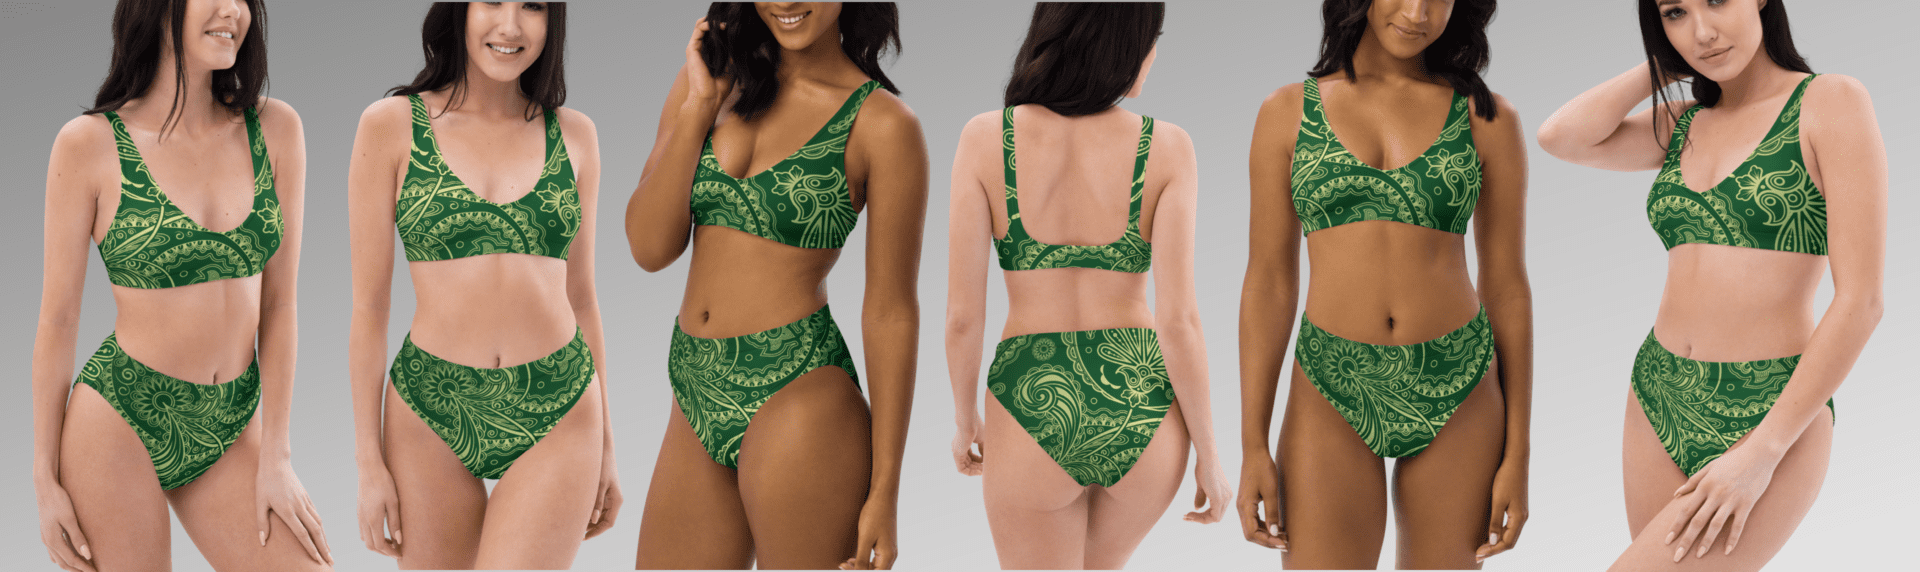 Green paisley print bikini on multiple models.